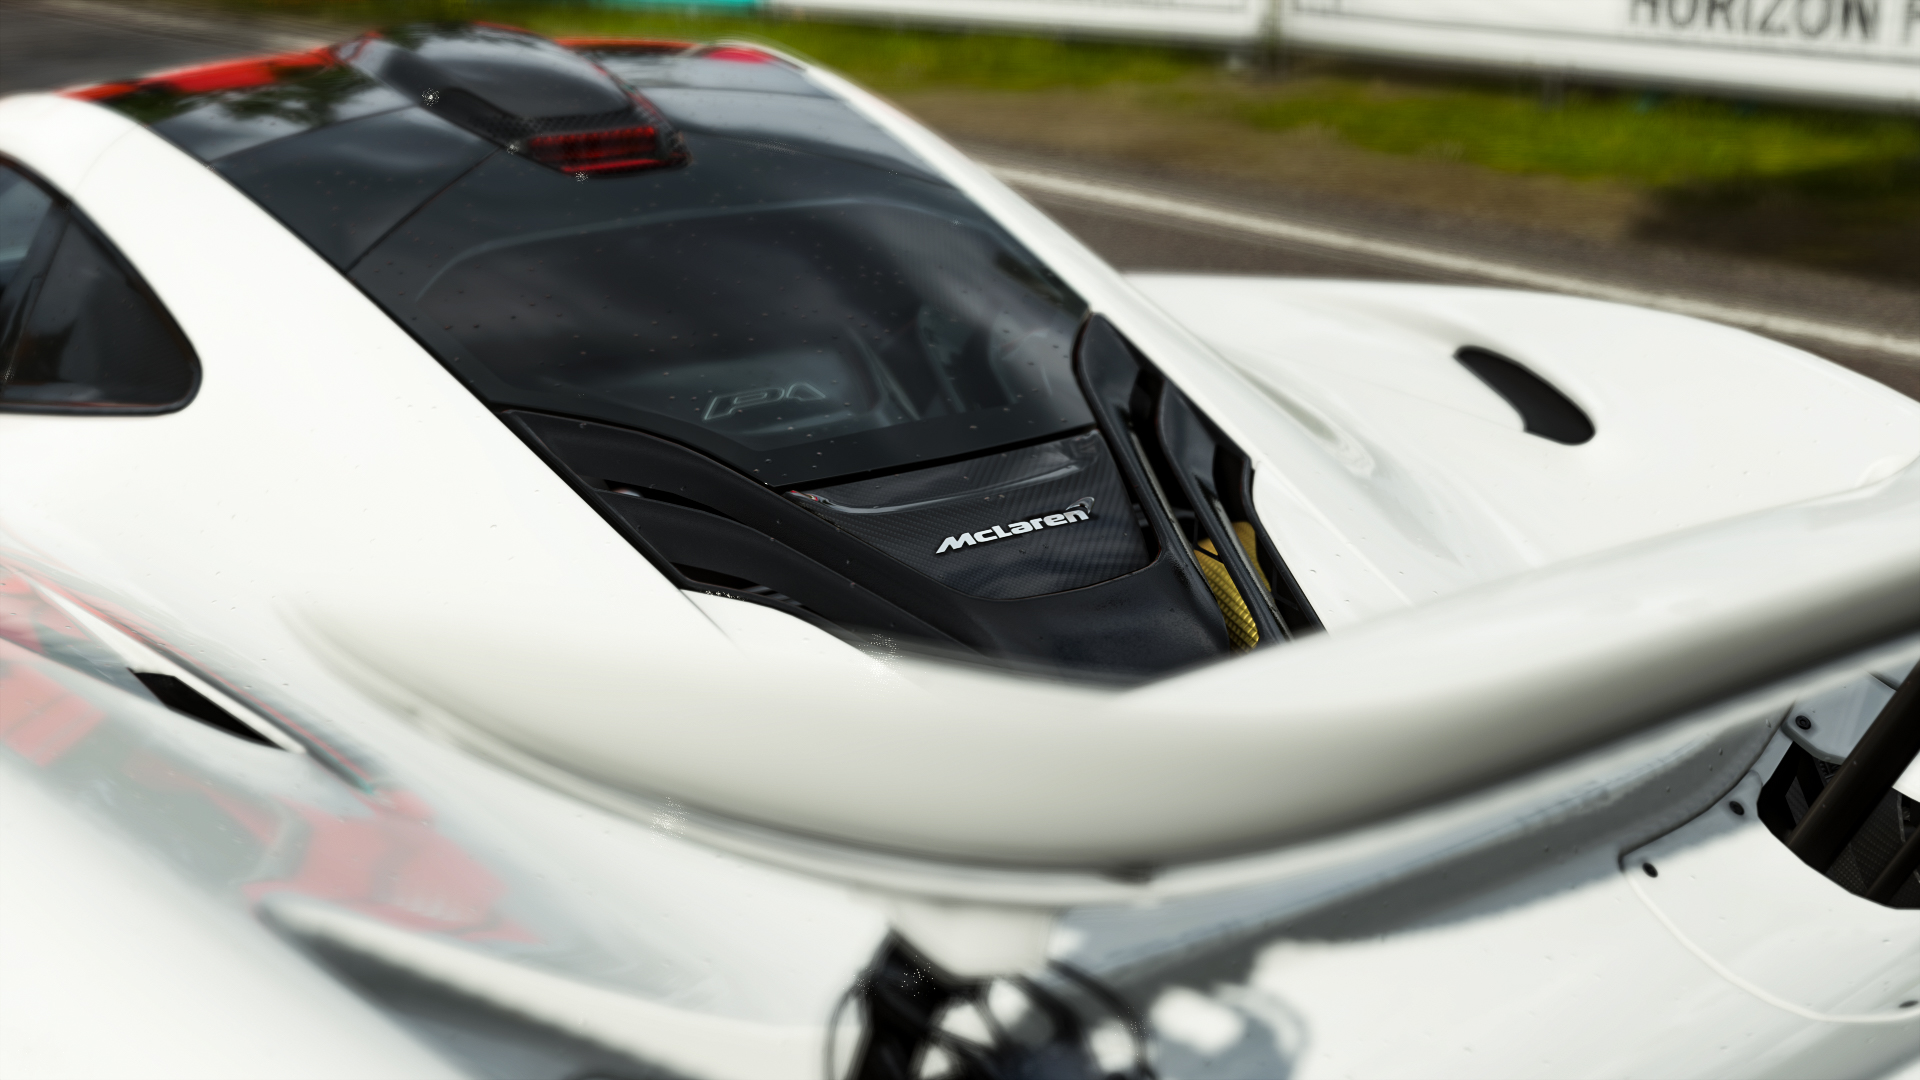 General 1920x1080 Forza Forza Horizon 4 Turn 10 Studios white cars McLaren supercars car vehicle racing video games